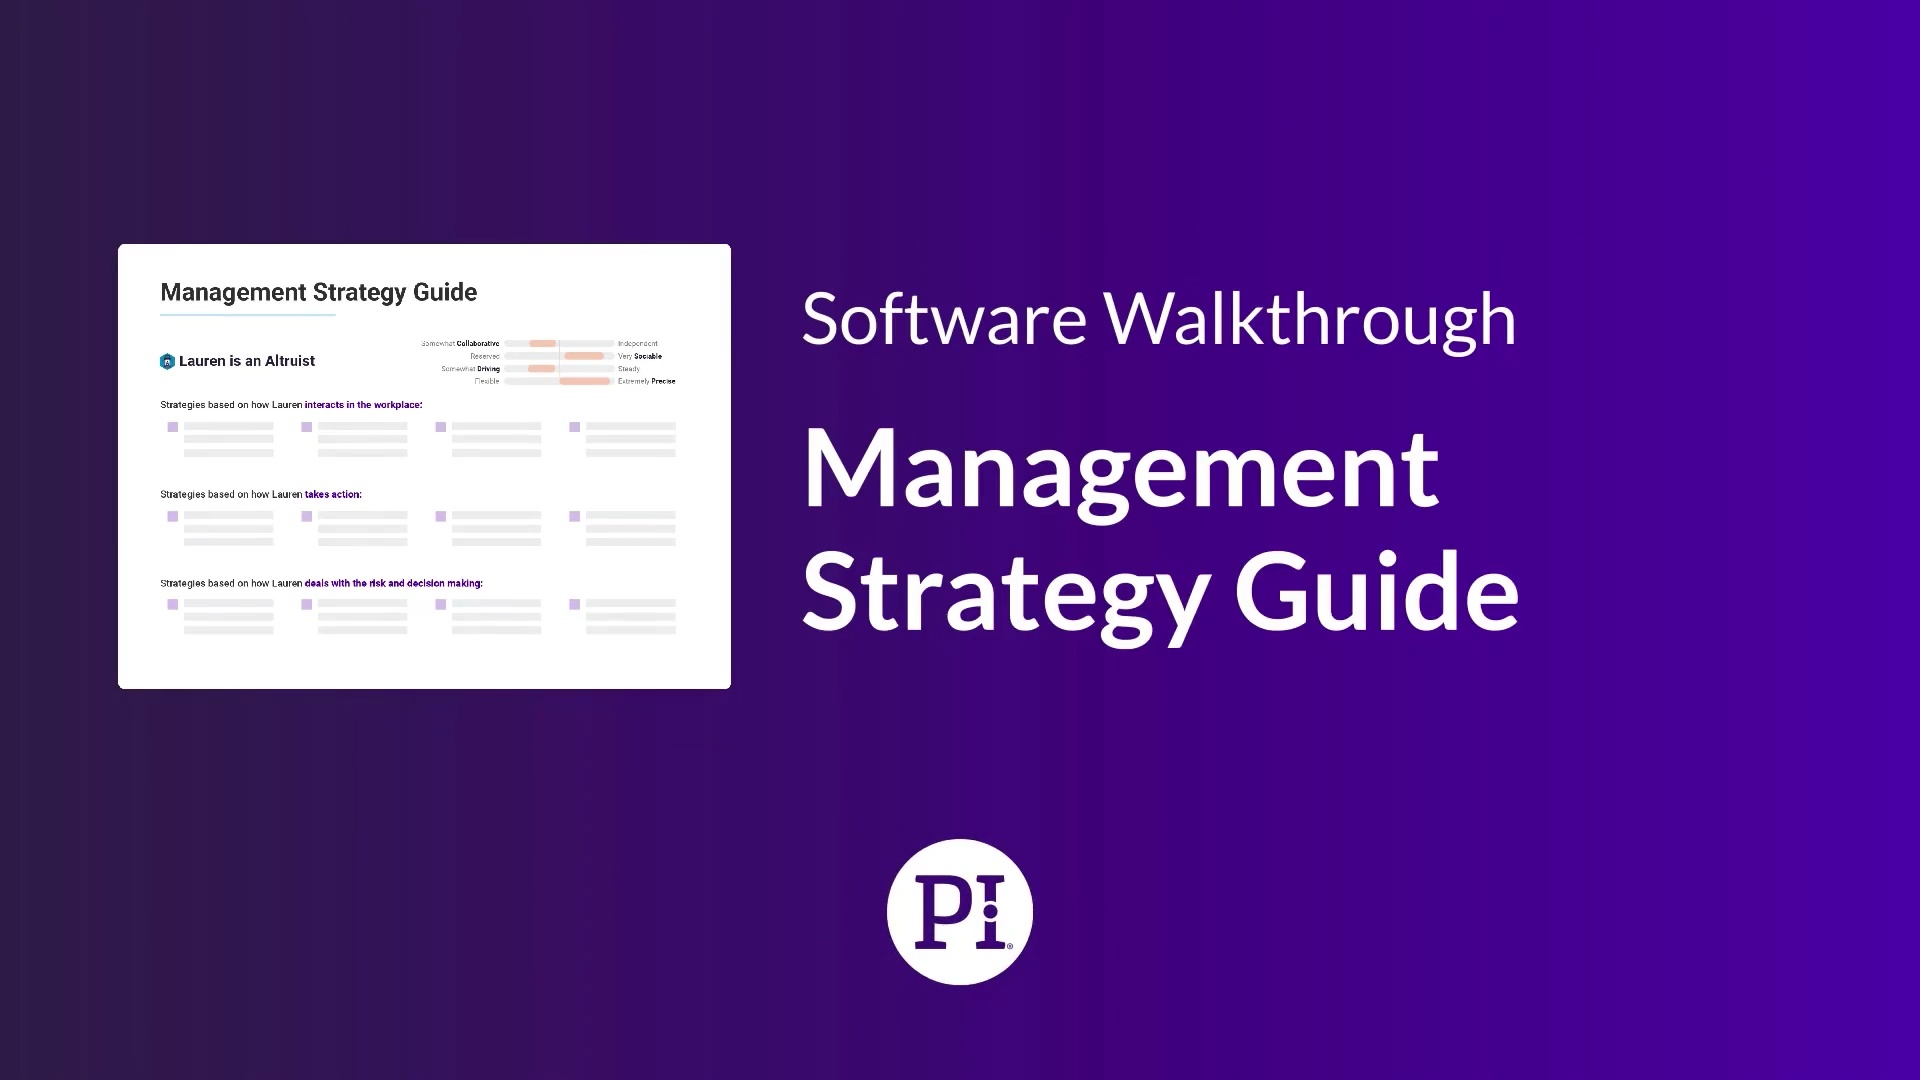 Management Strategy Guide Walkthrough